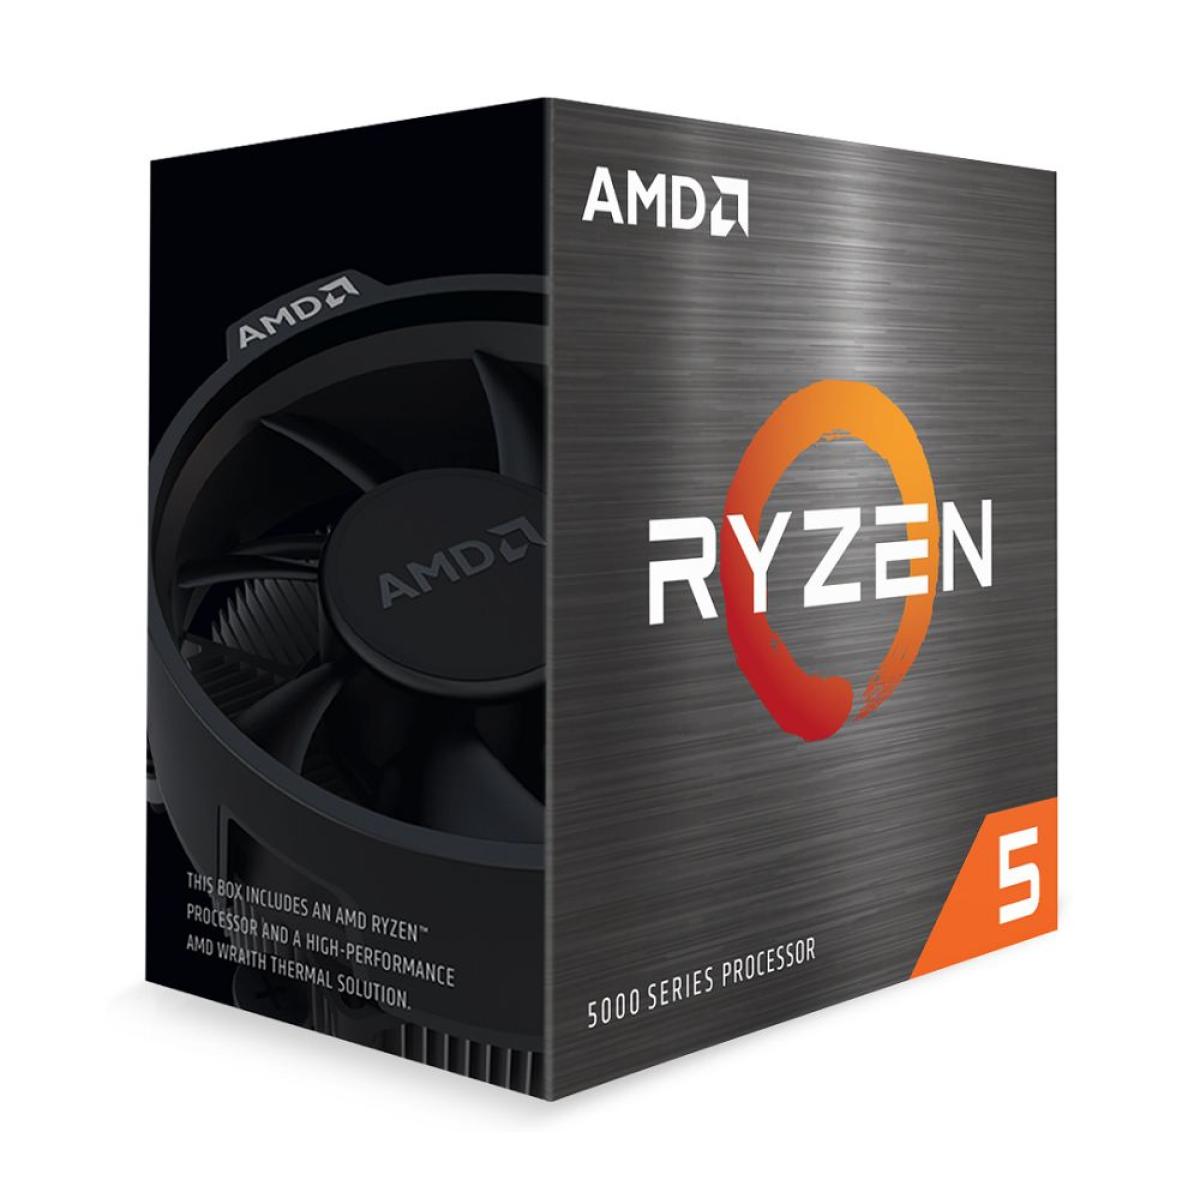 AMD Ryzen 5 5600X Up to 4.6 GHz 6 Core, 12 Threads AM4 Processor | AMD